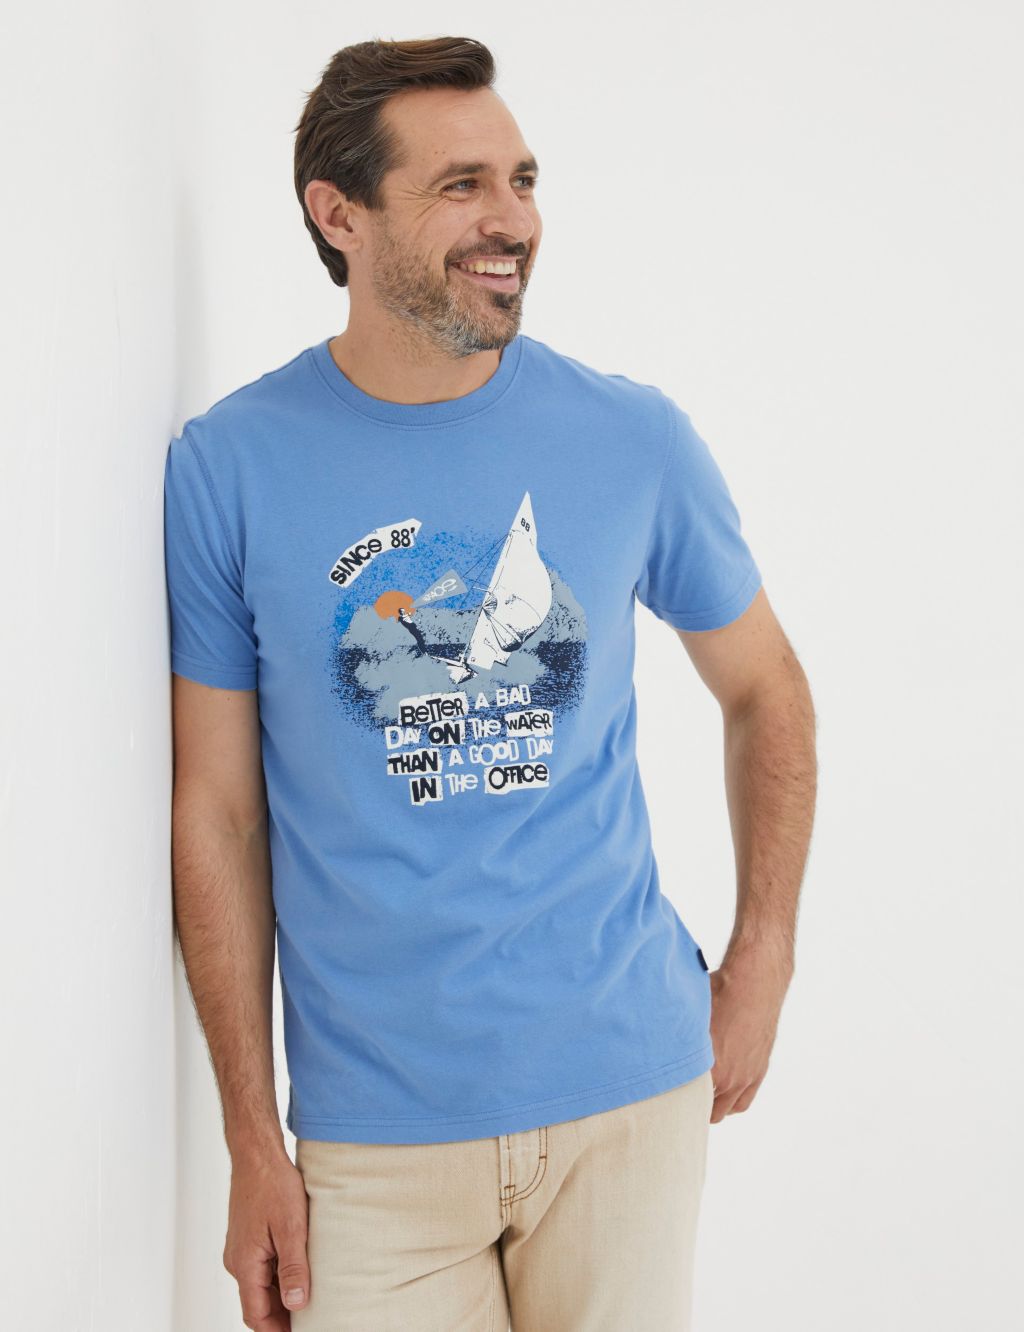 Pure Cotton Sailing Graphic T-Shirt